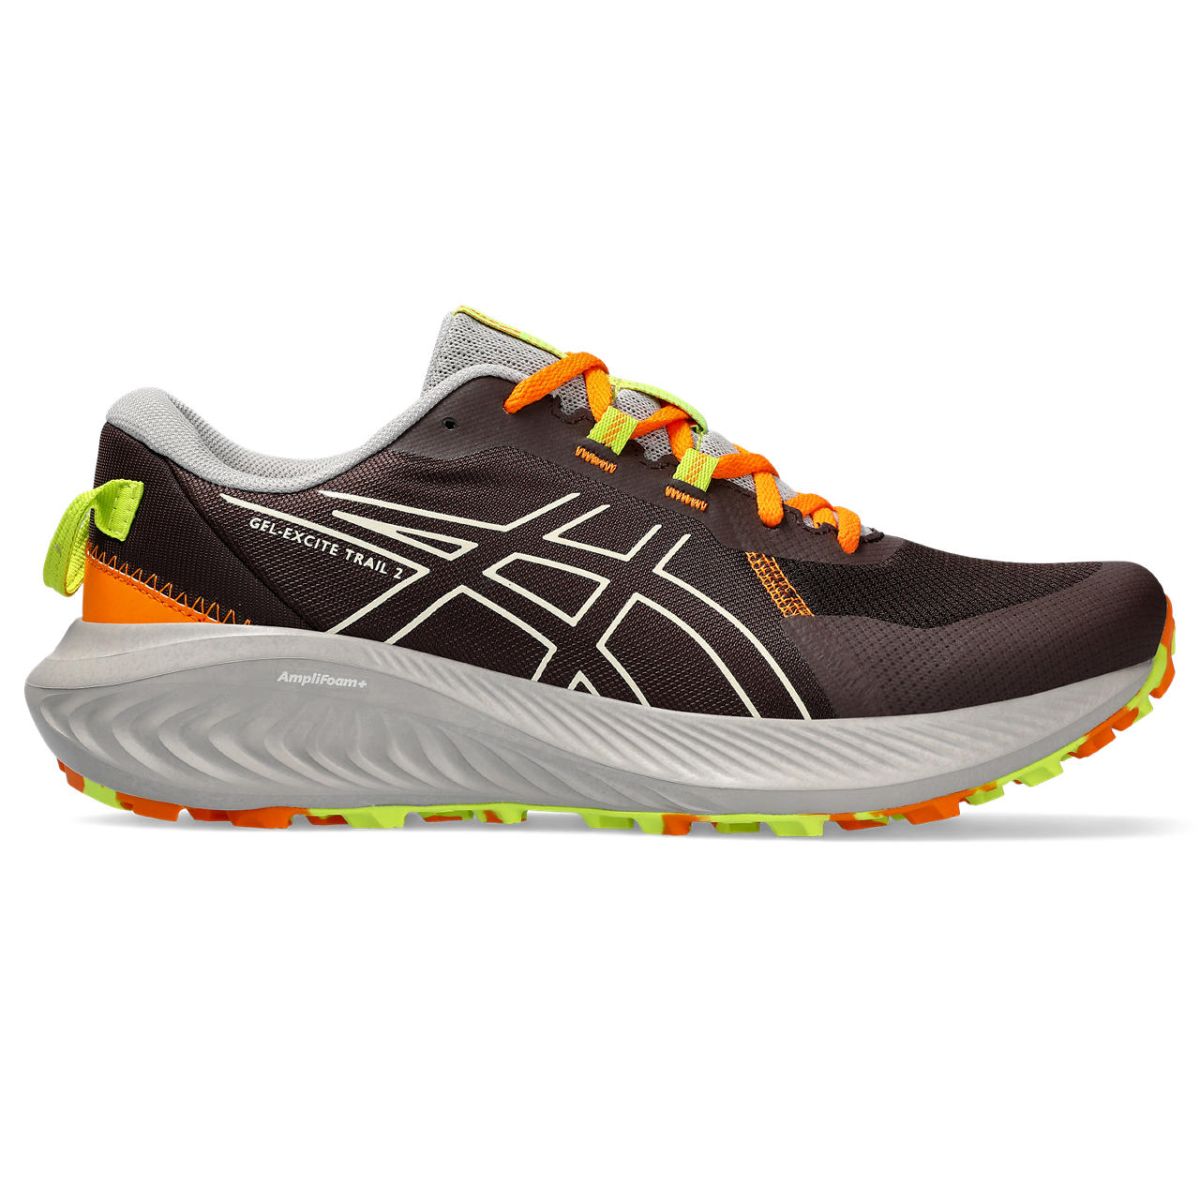 Asics Gel-Excite 2 Men's Trail Running Shoes 1011B594-200